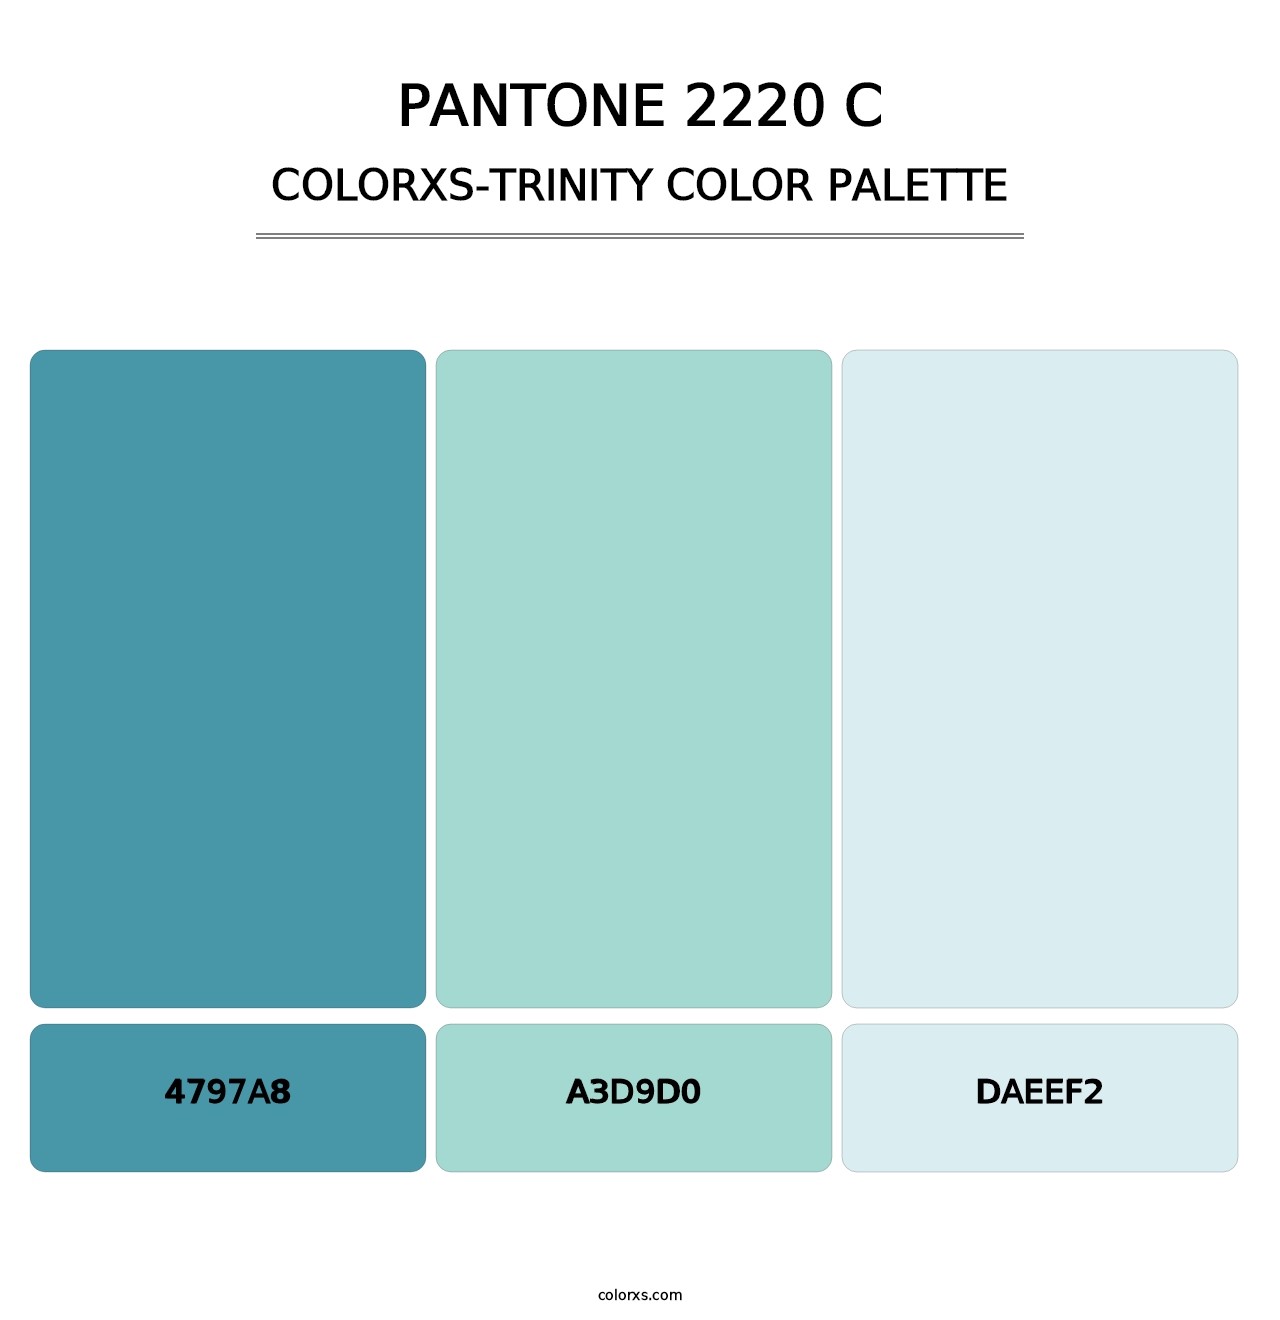 PANTONE 2220 C - Colorxs Trinity Palette